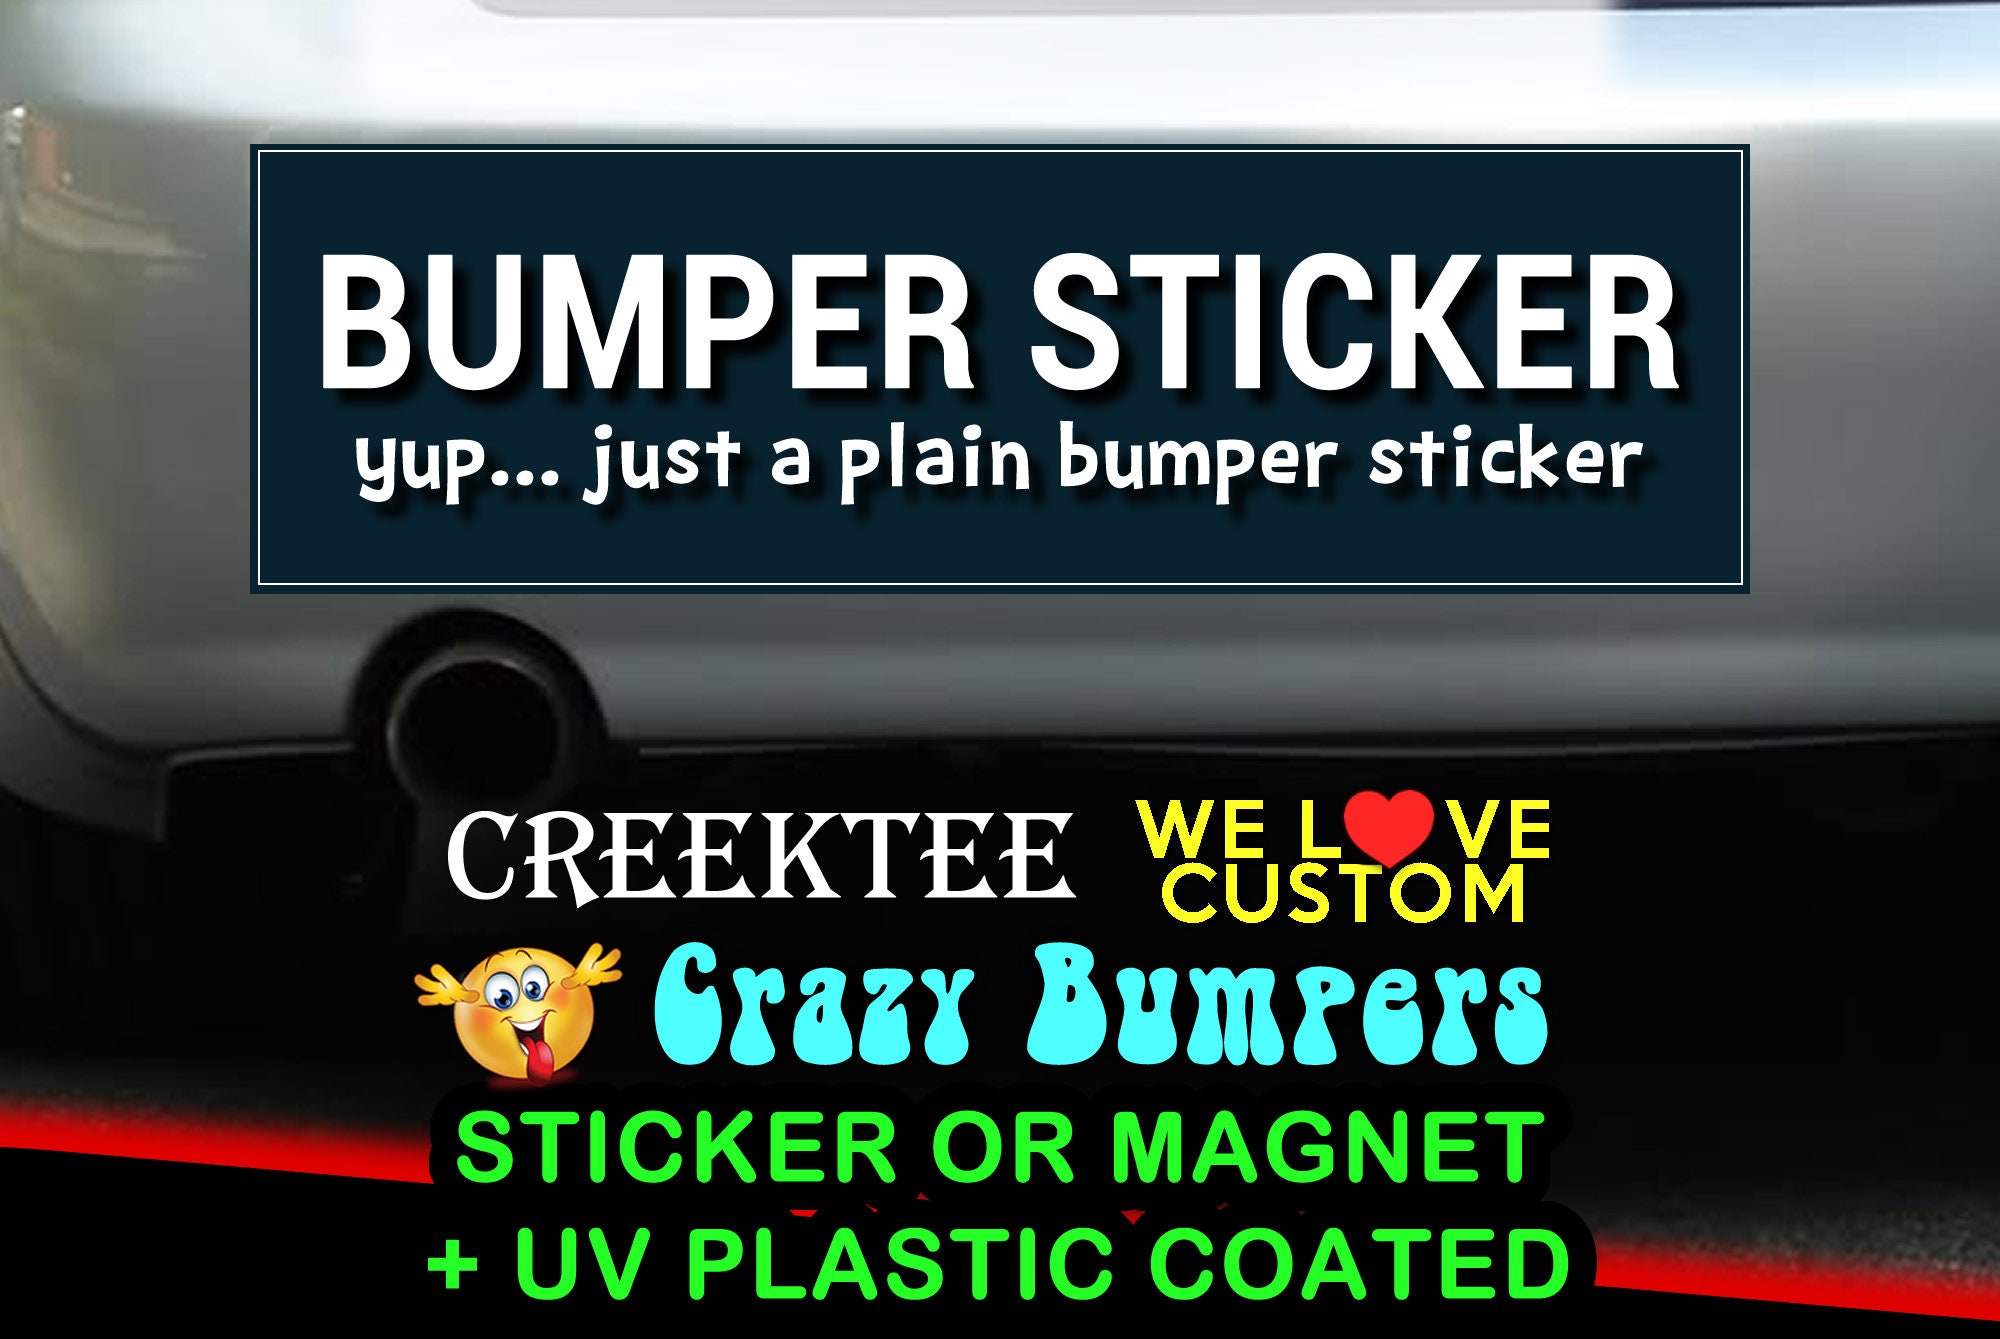 Bumper Sticker yup just a plain bumper sticker 9 x 2.7 or 10 x 3 Sticker Magnet or bumper sticker or bumper magnet